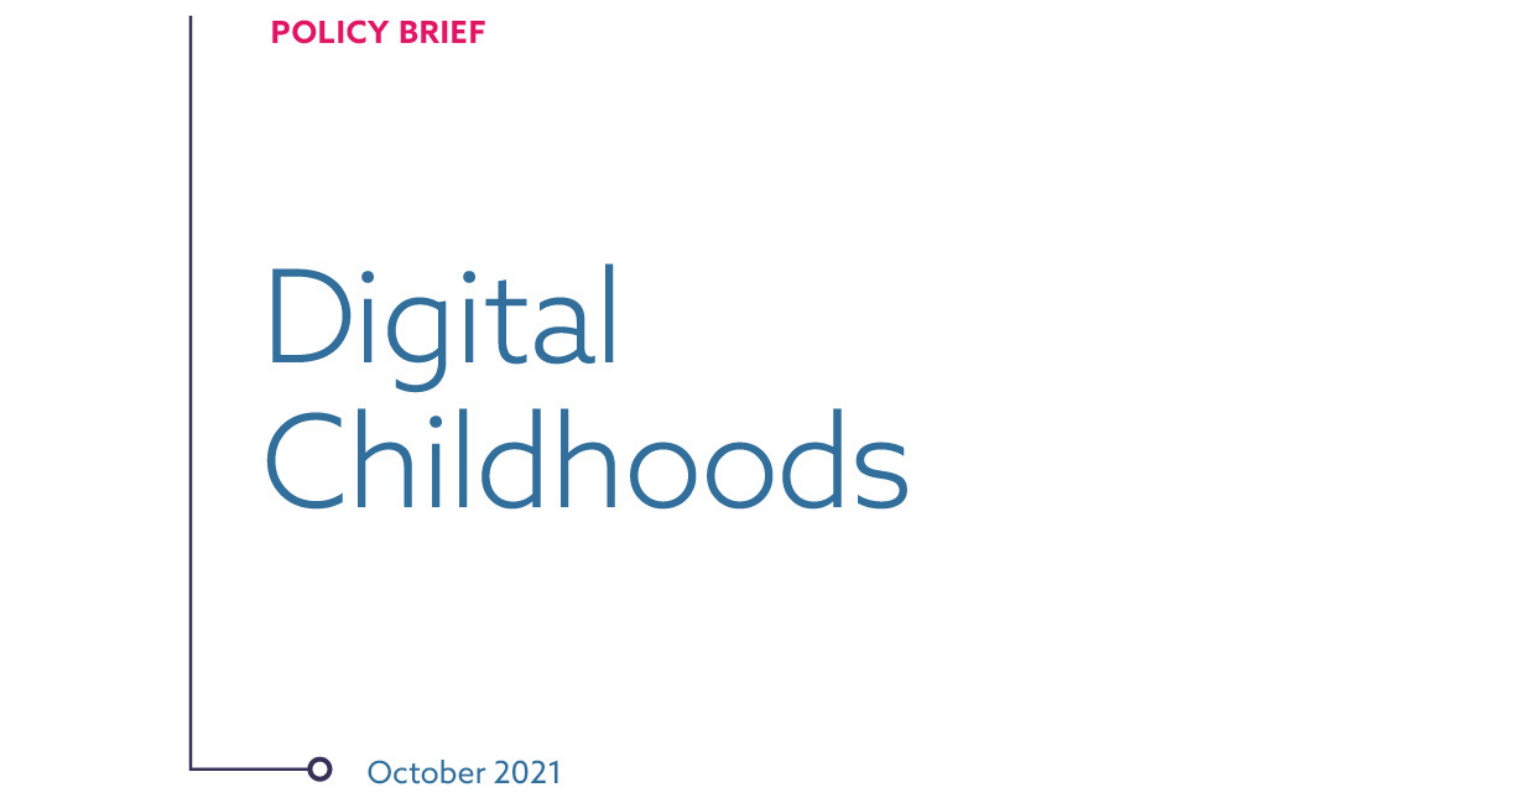 Policy Brief - Digital Childhoods